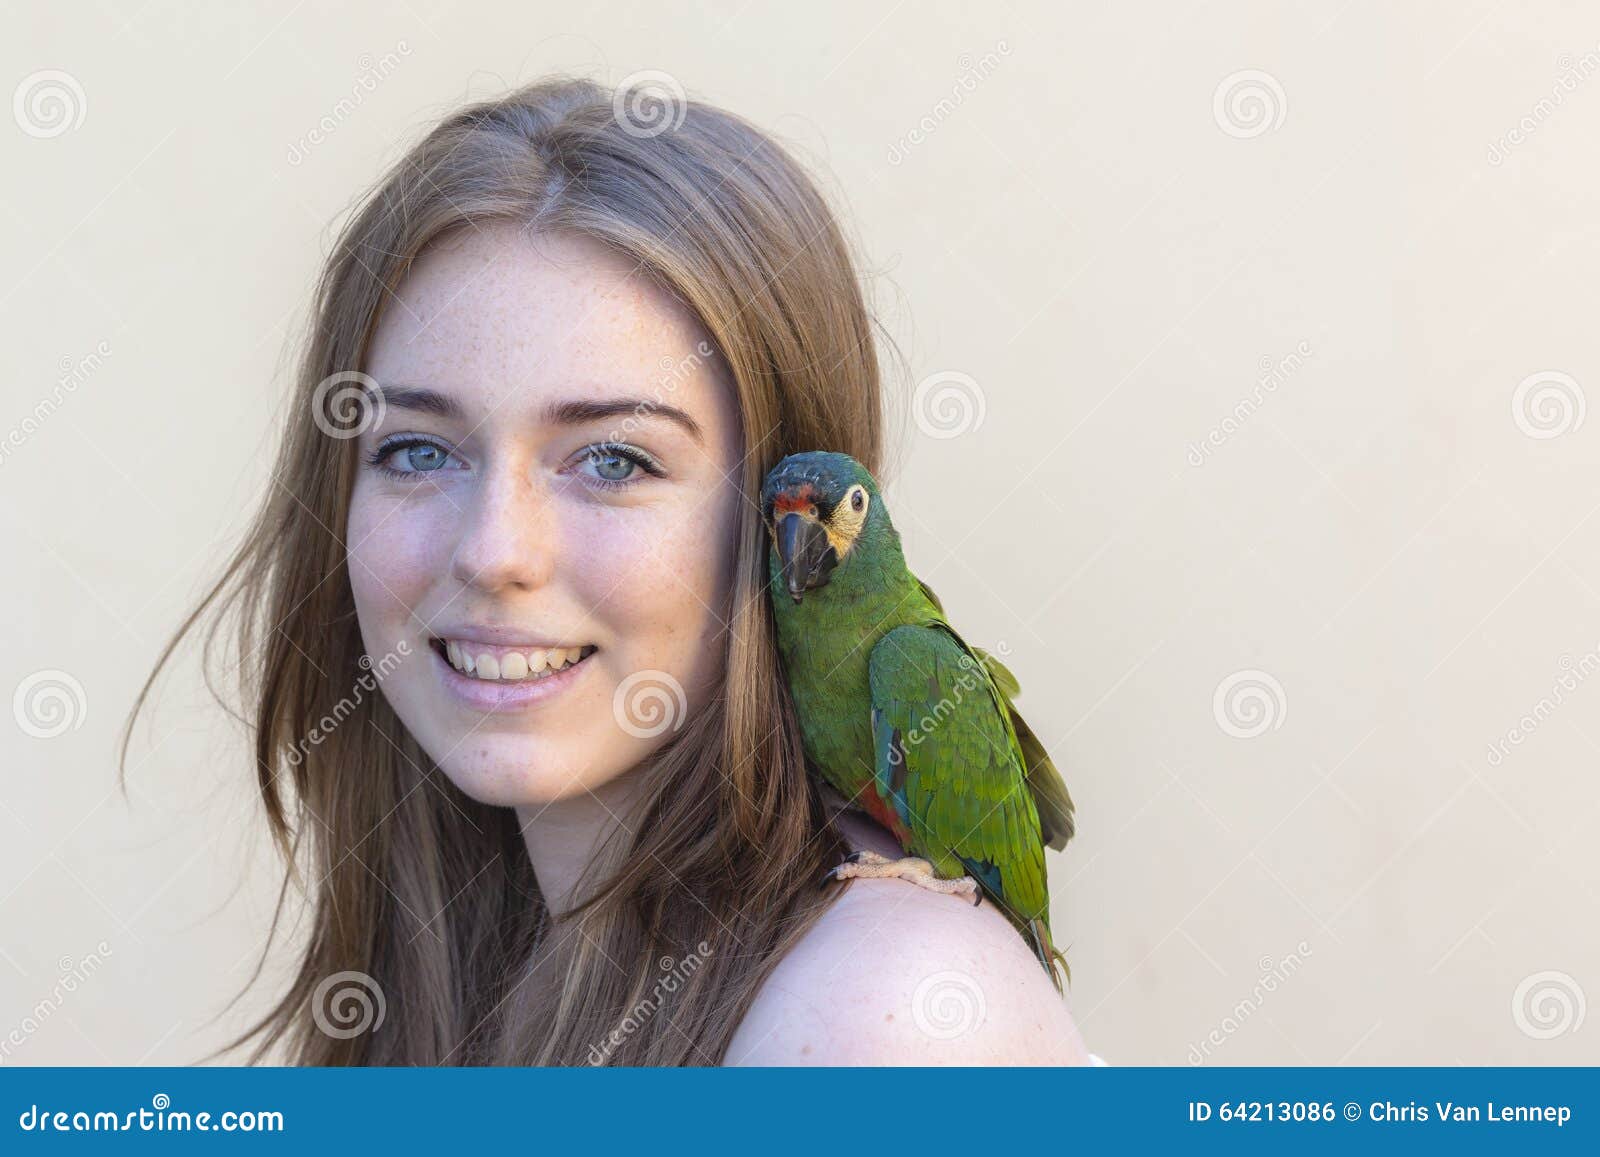 767 Bird Girl Teen Stock Photos - Free & Royalty-Free Stock Photos from  Dreamstime